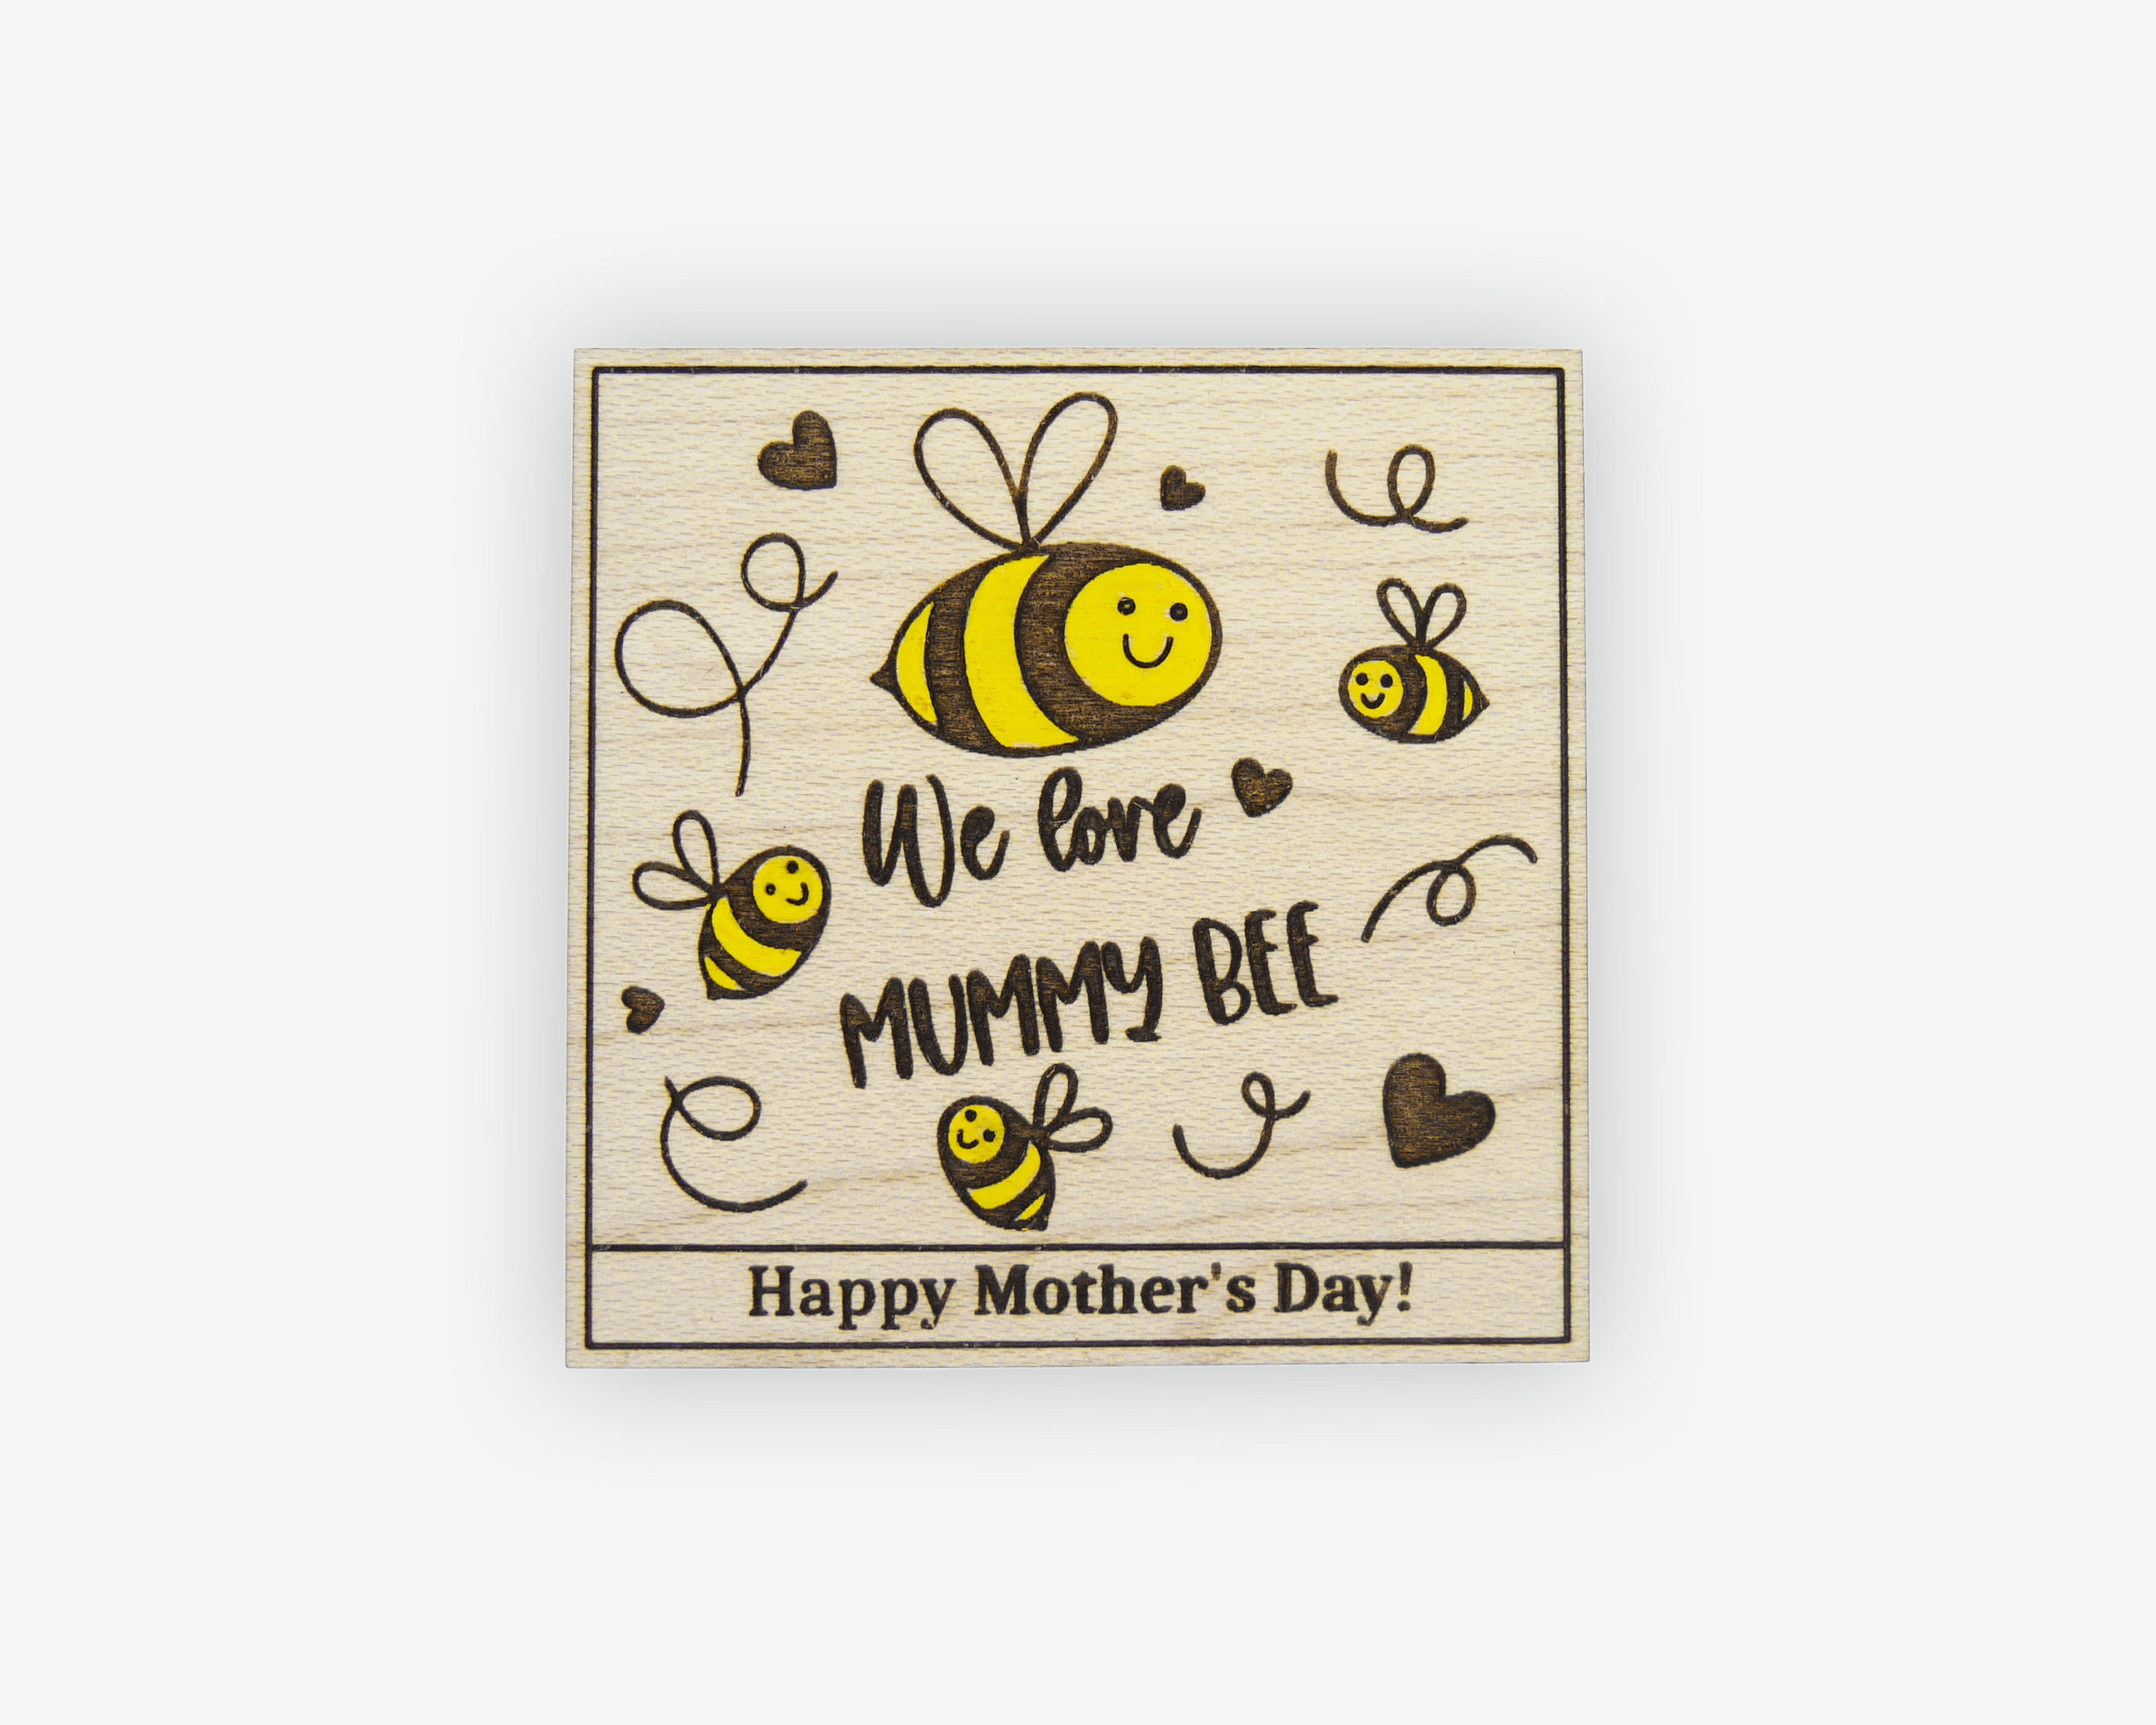 We Love You Mummy Bee